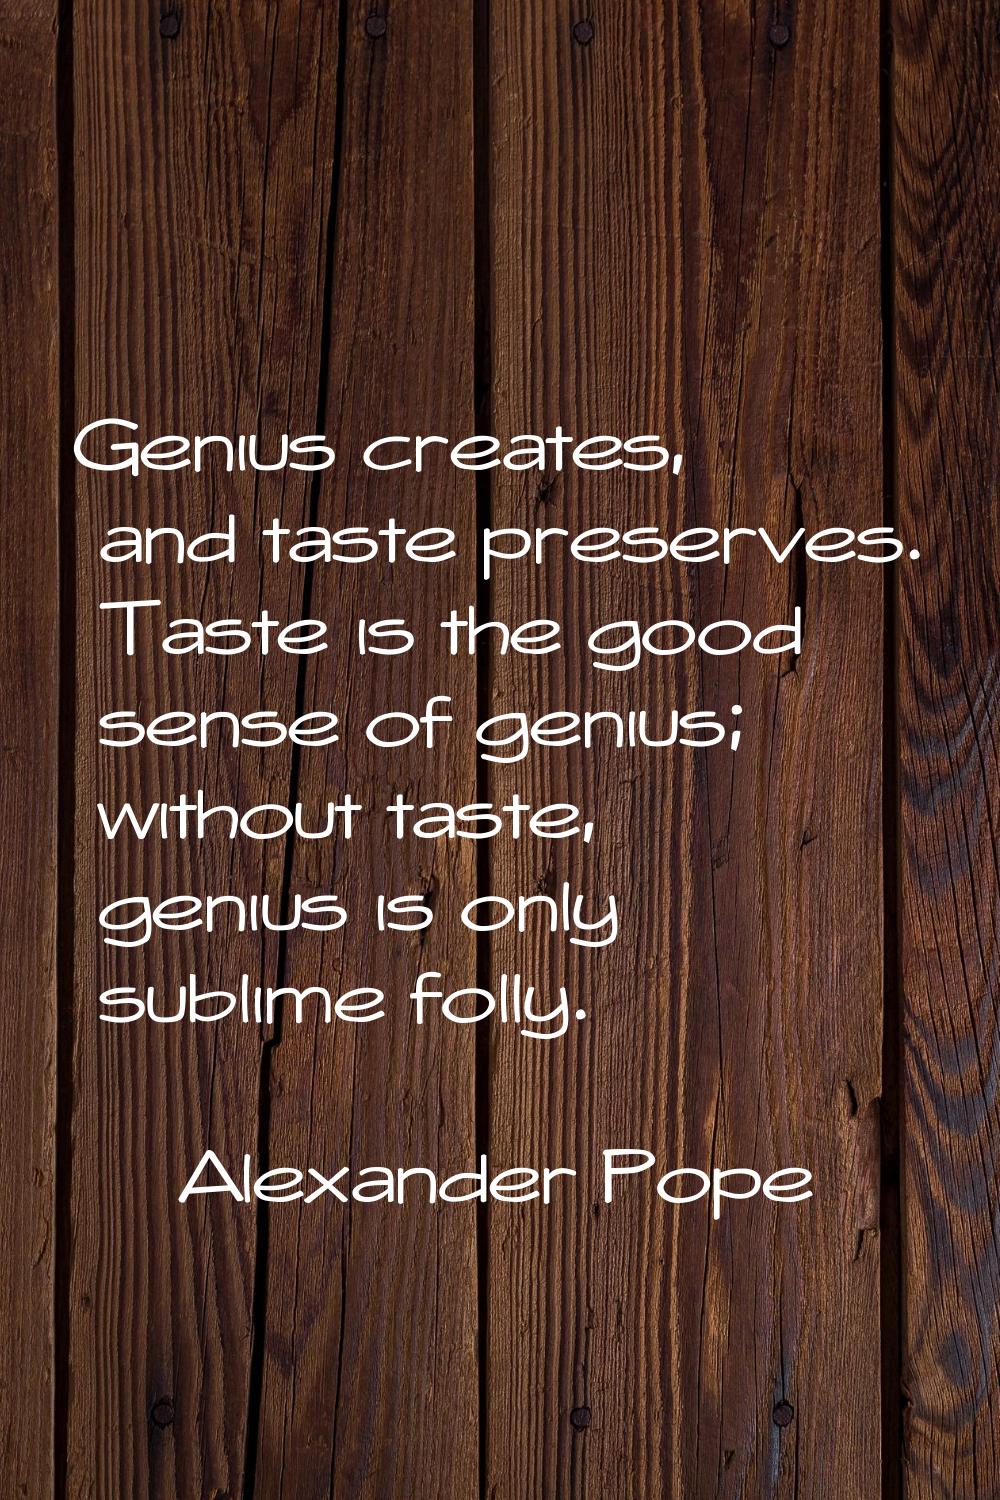 Genius creates, and taste preserves. Taste is the good sense of genius; without taste, genius is on